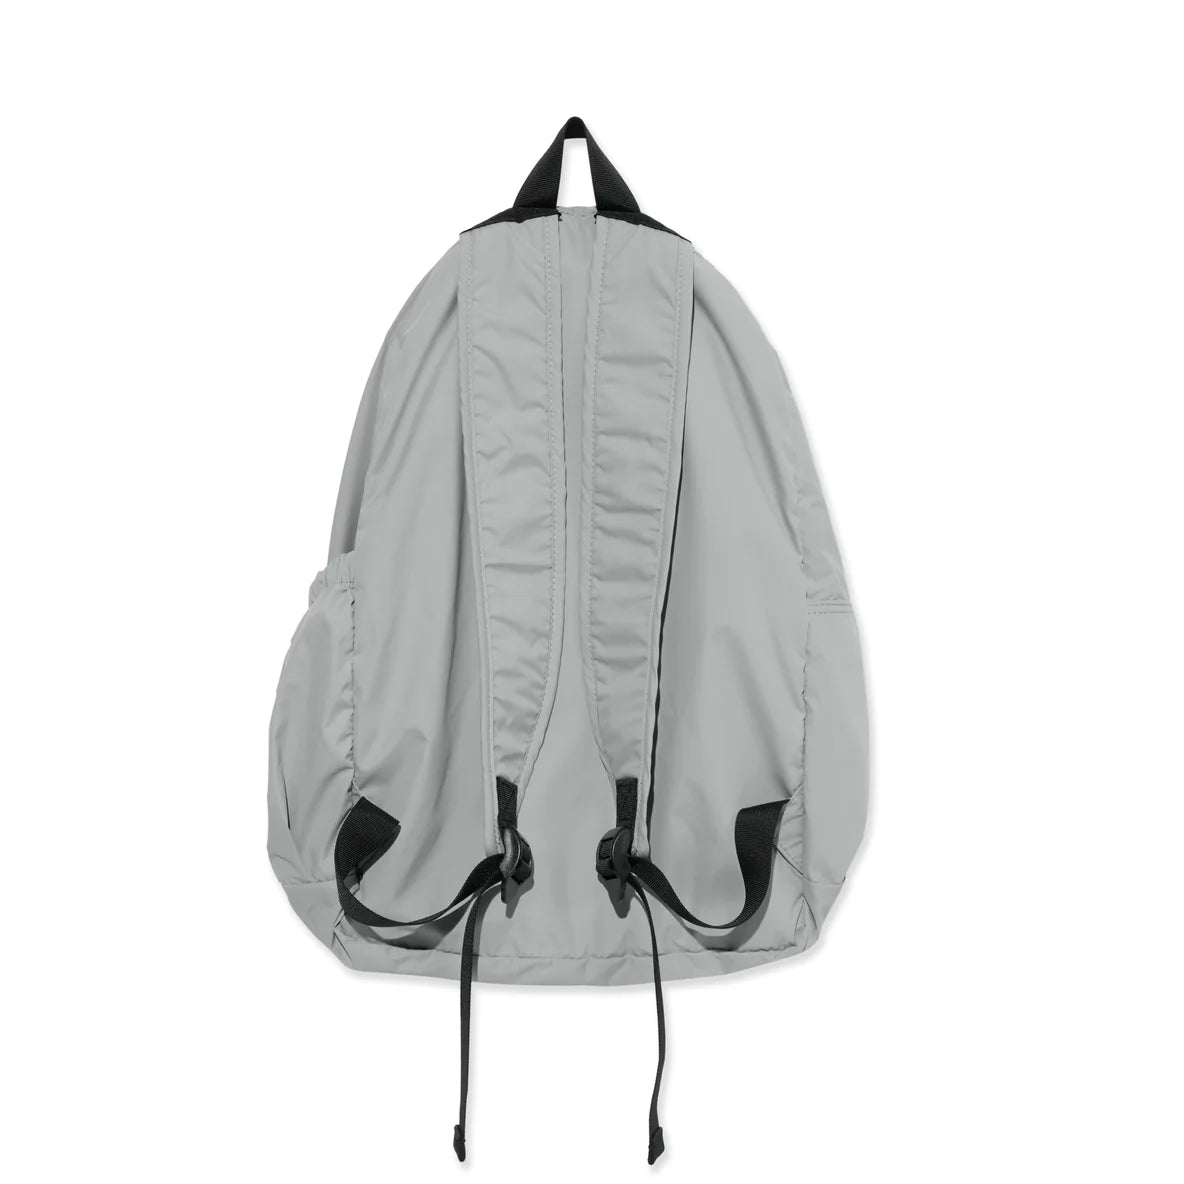 POLAR SKATE CO. - Packable Backpack Silver